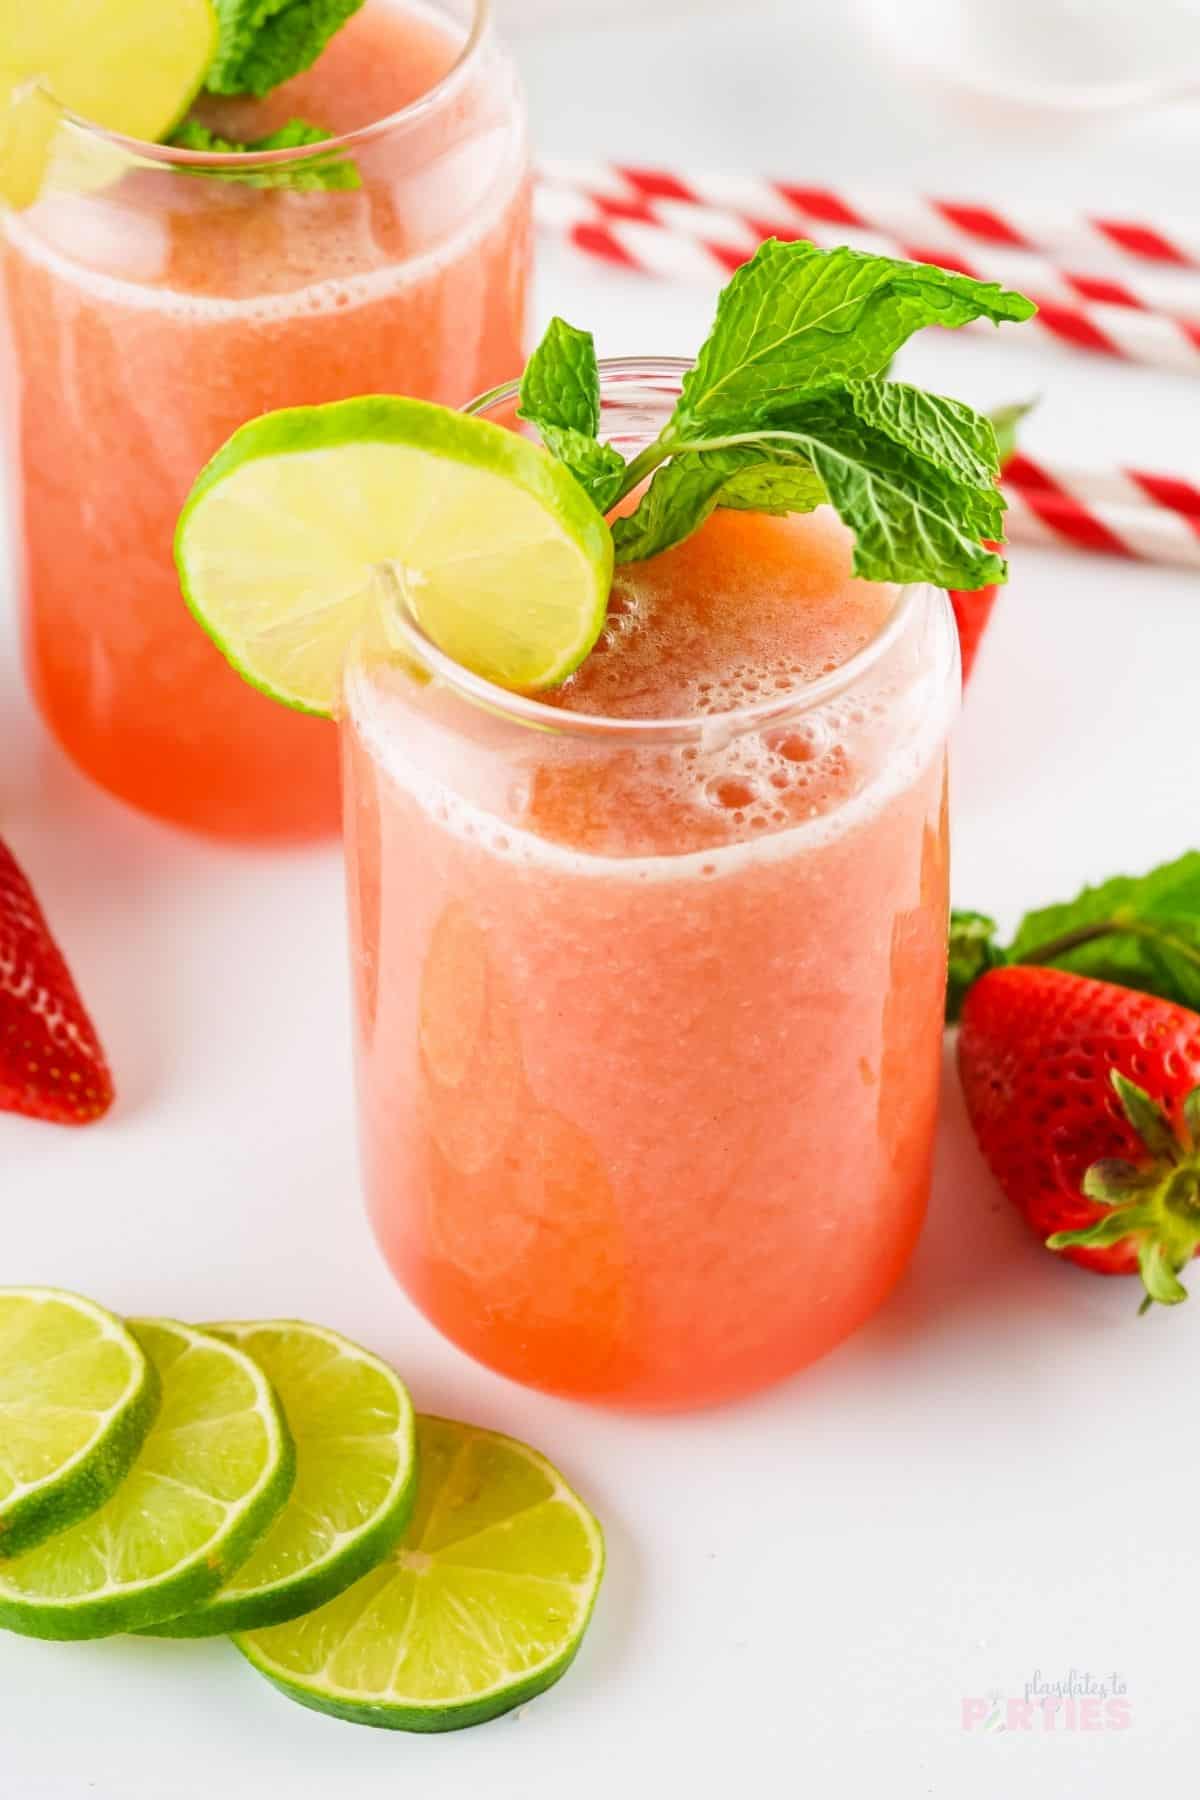 Blended strawberry fruit water.